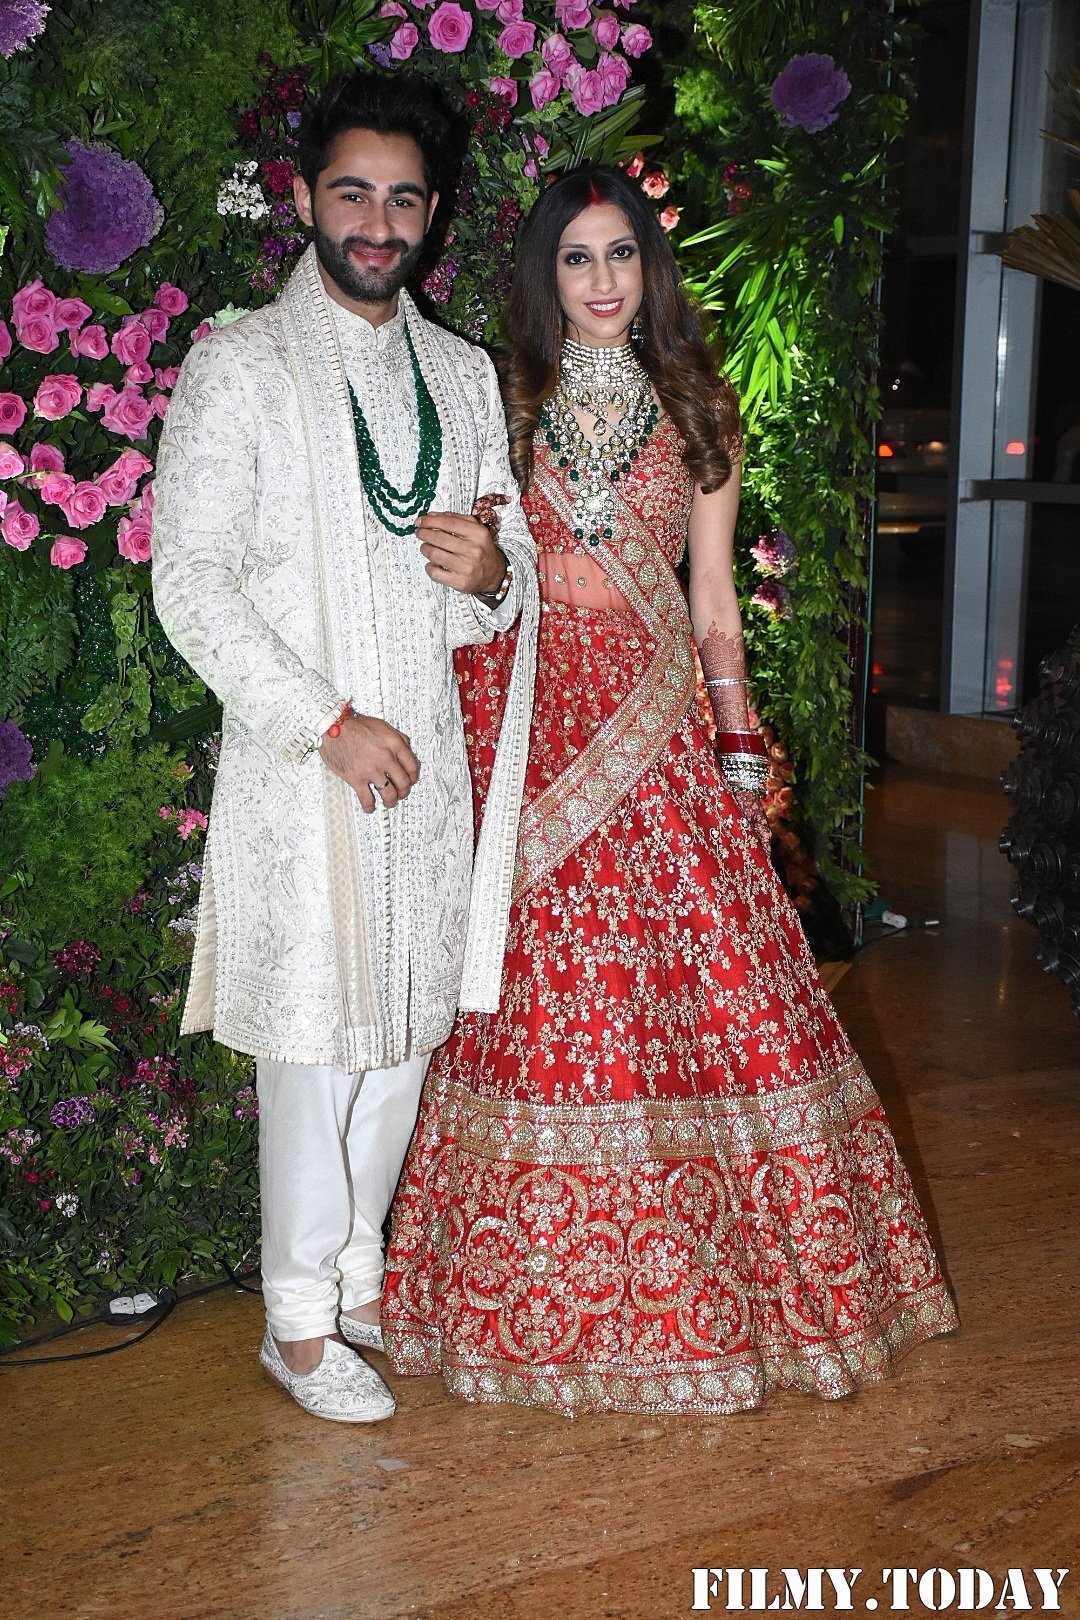 Photos: Armaan Jain & Anissa Malhotra Wedding Reception | Picture 1719580